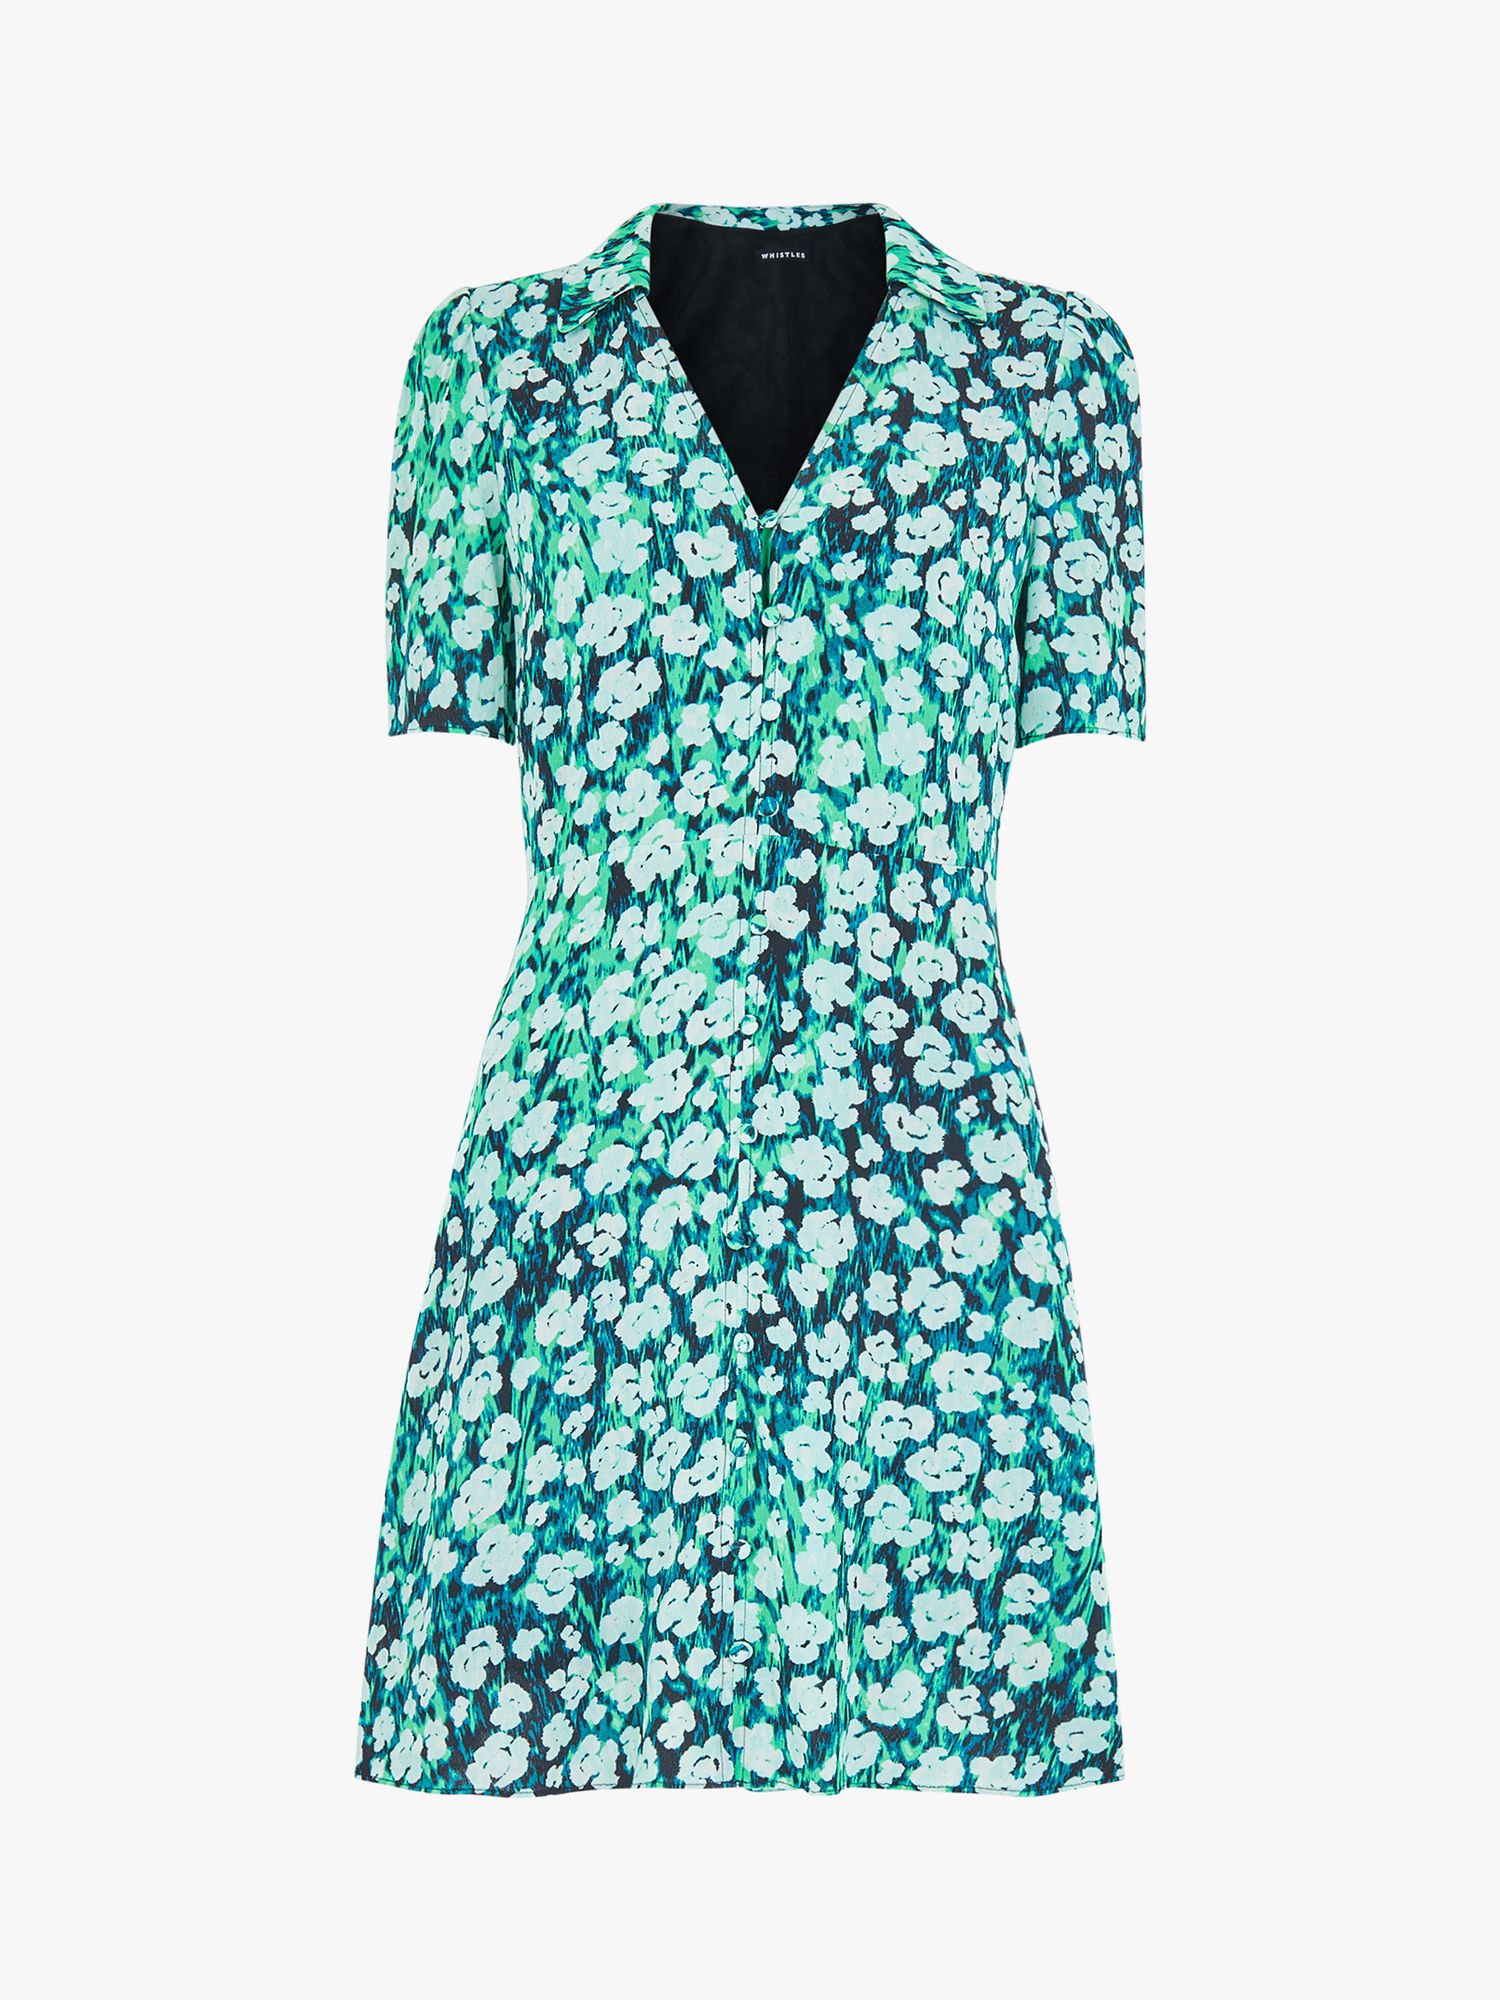 Whistles Floral Petal Rowan Dress, Green/Multi, 18